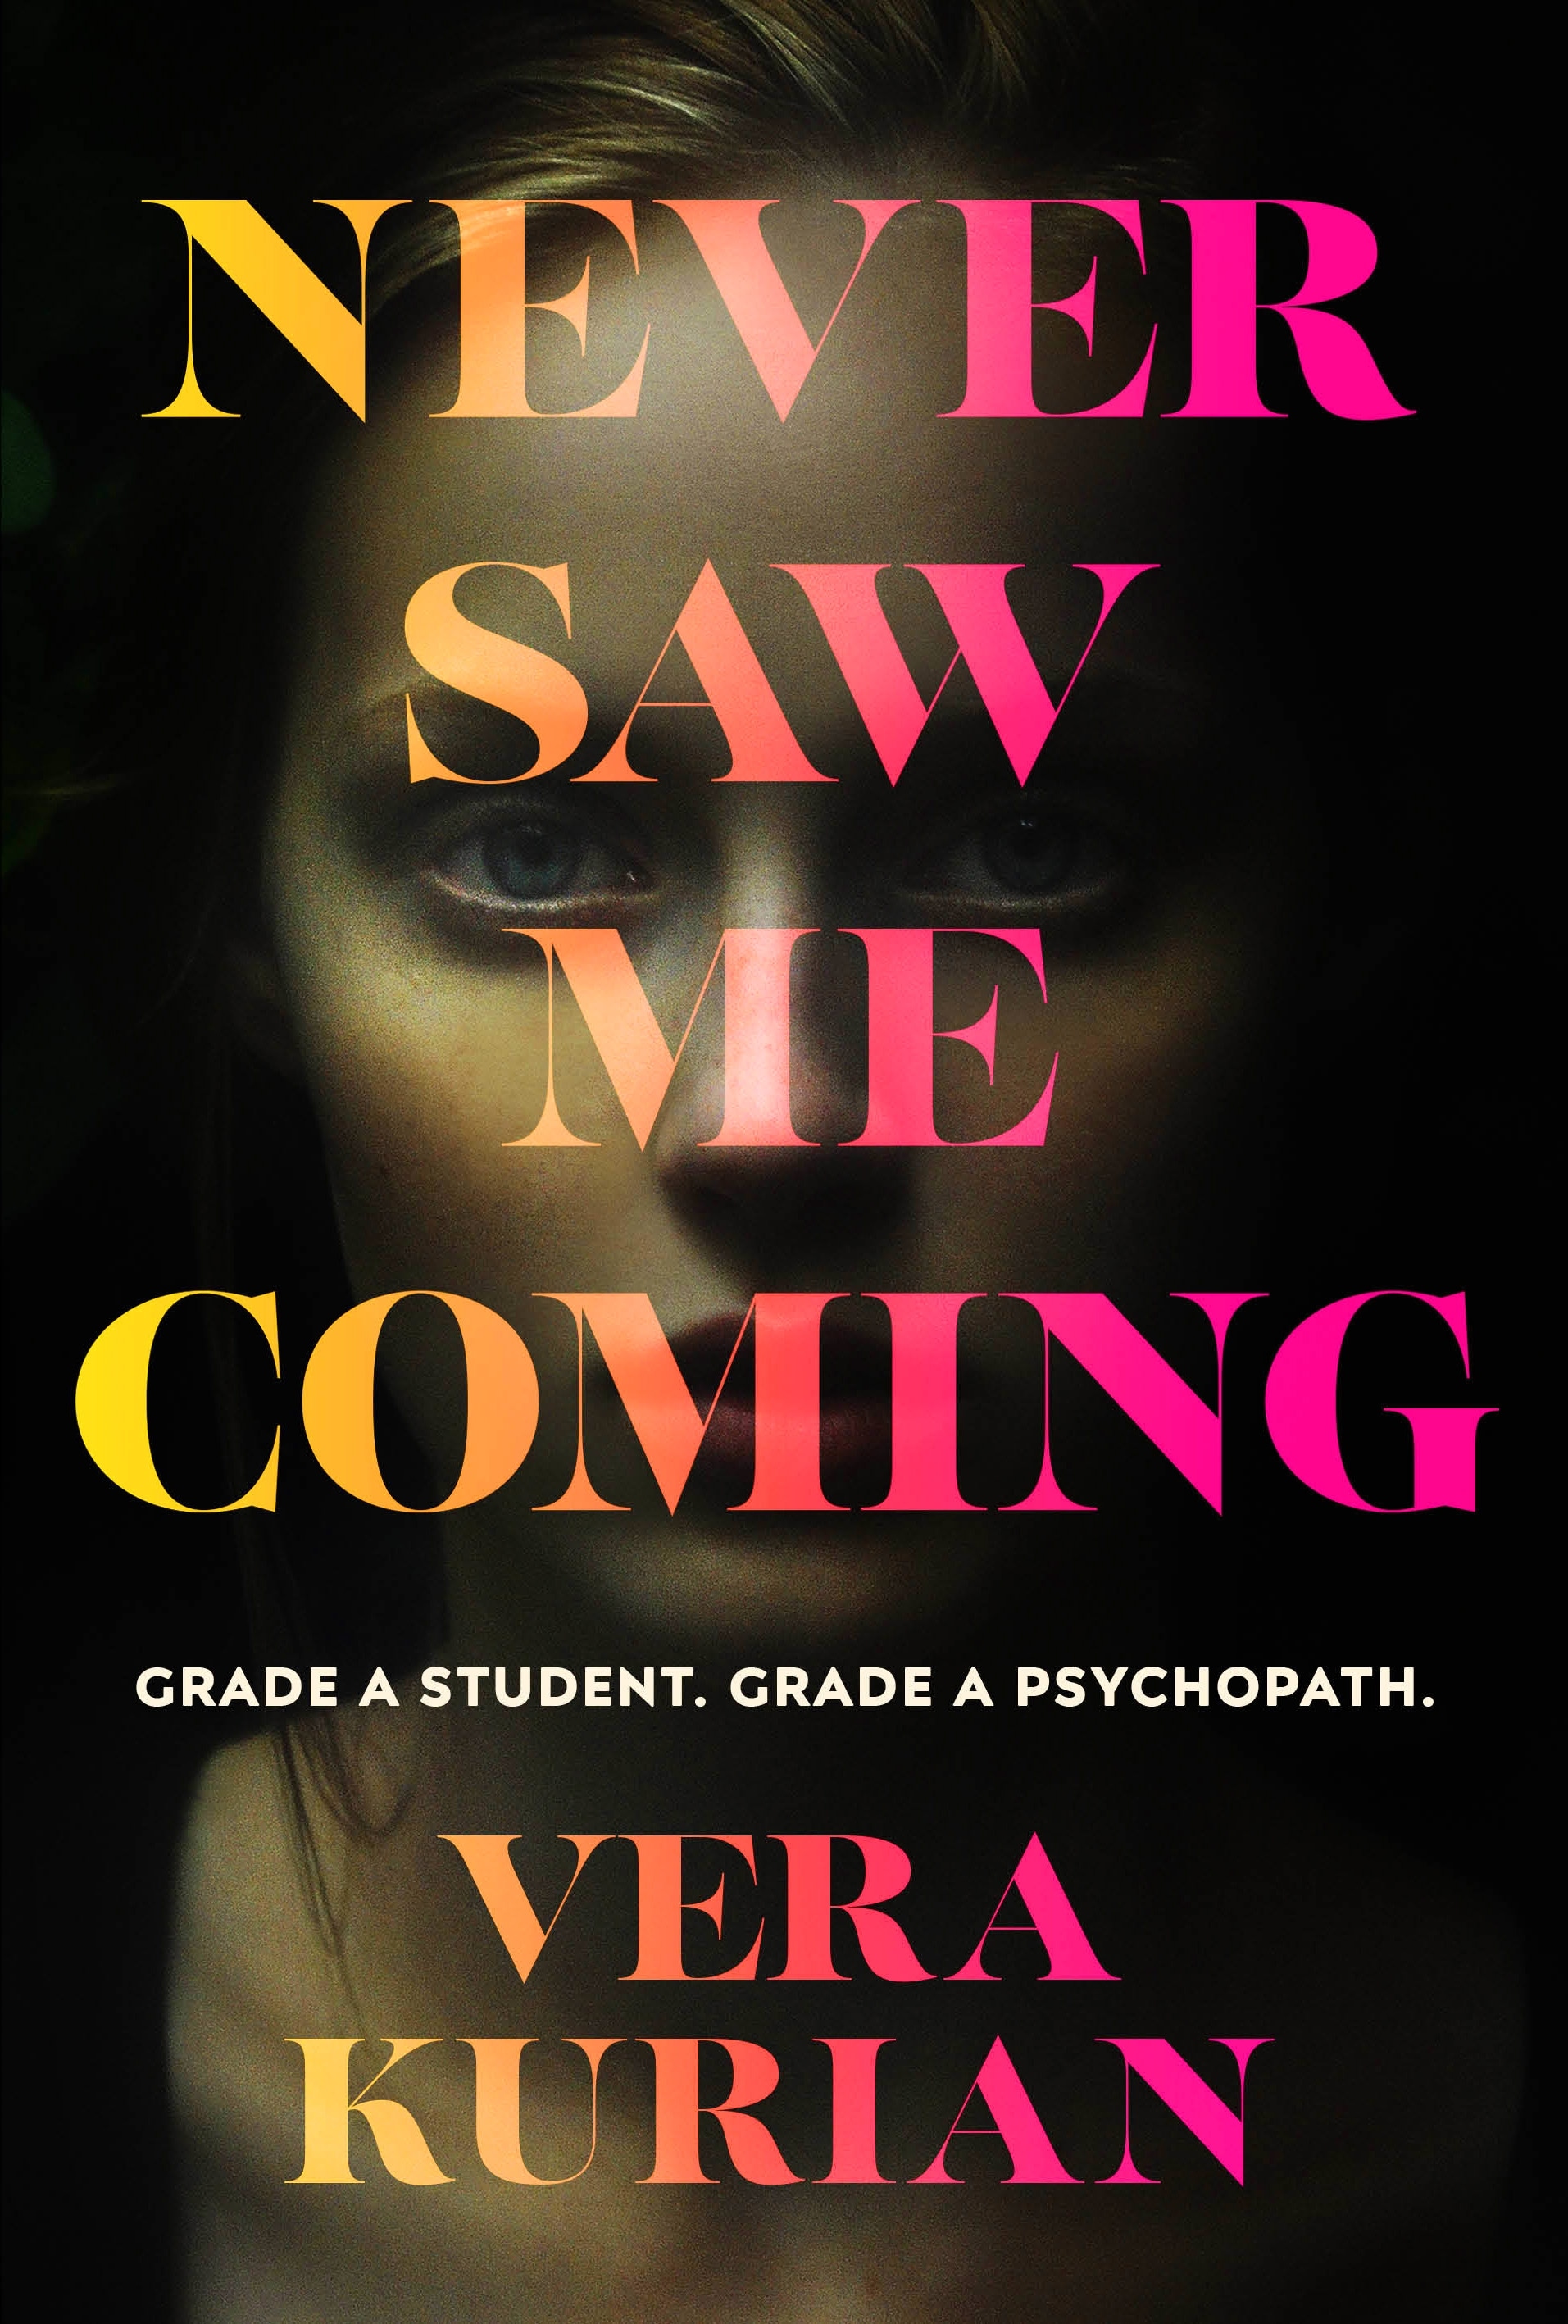 Book “Never Saw Me Coming” by Vera Kurian — September 9, 2021